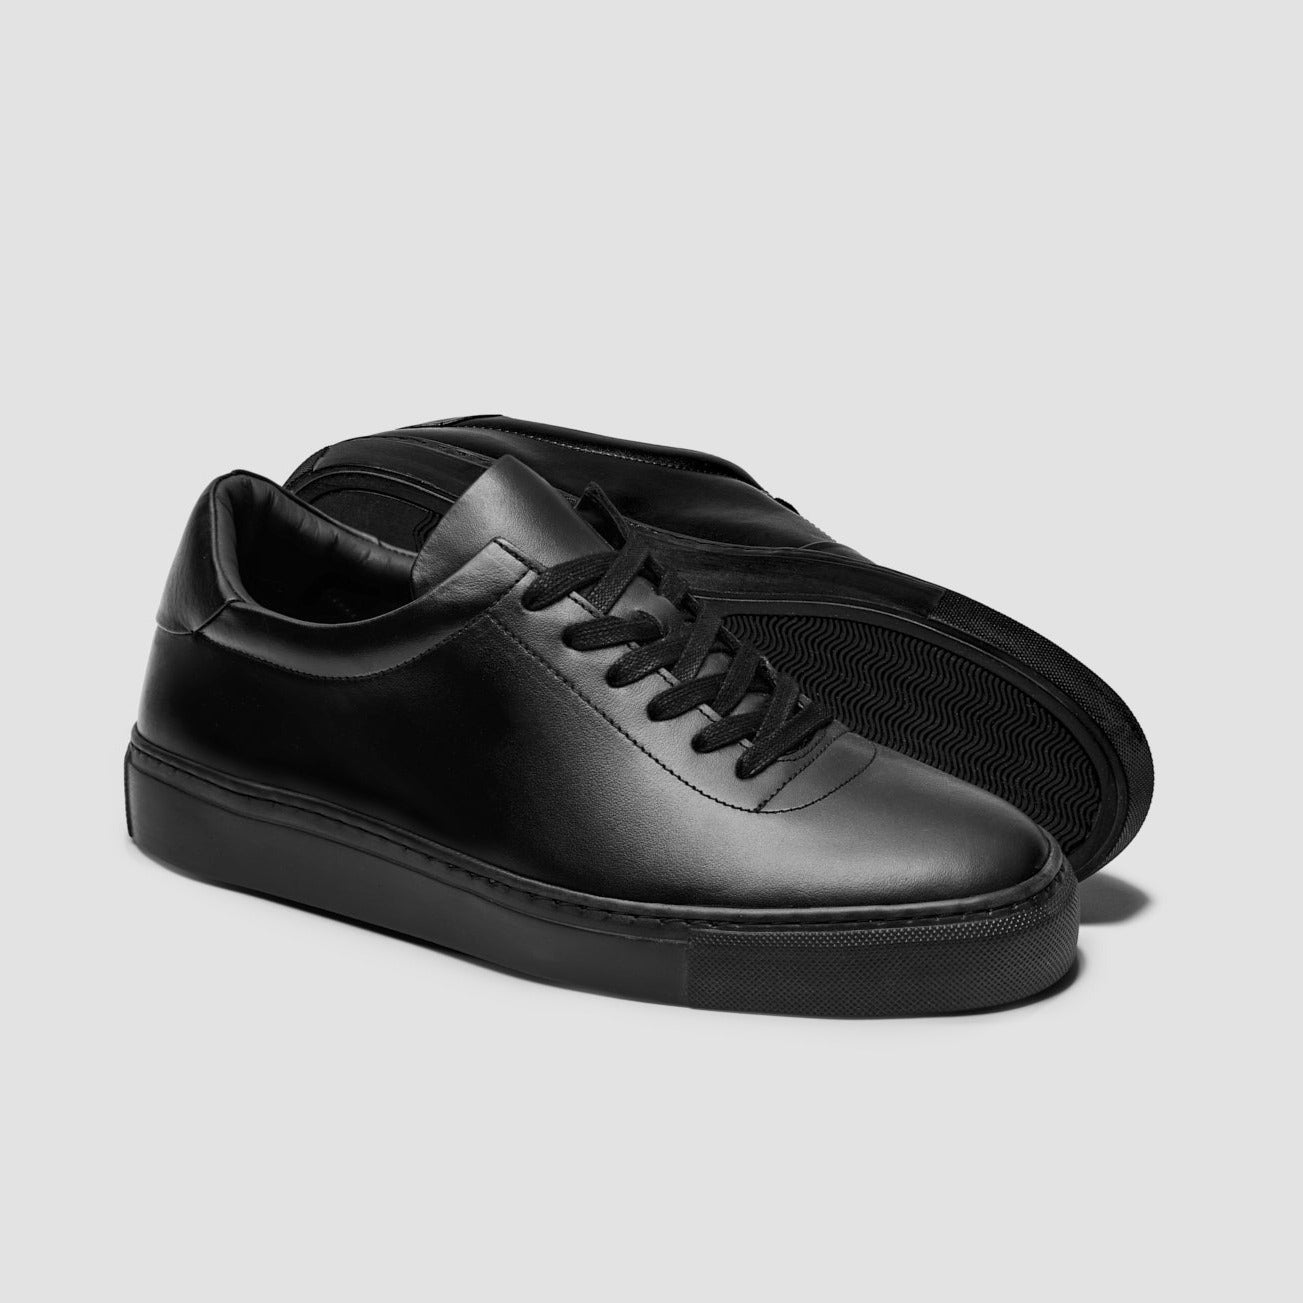 The Sneaker 001 Top Black